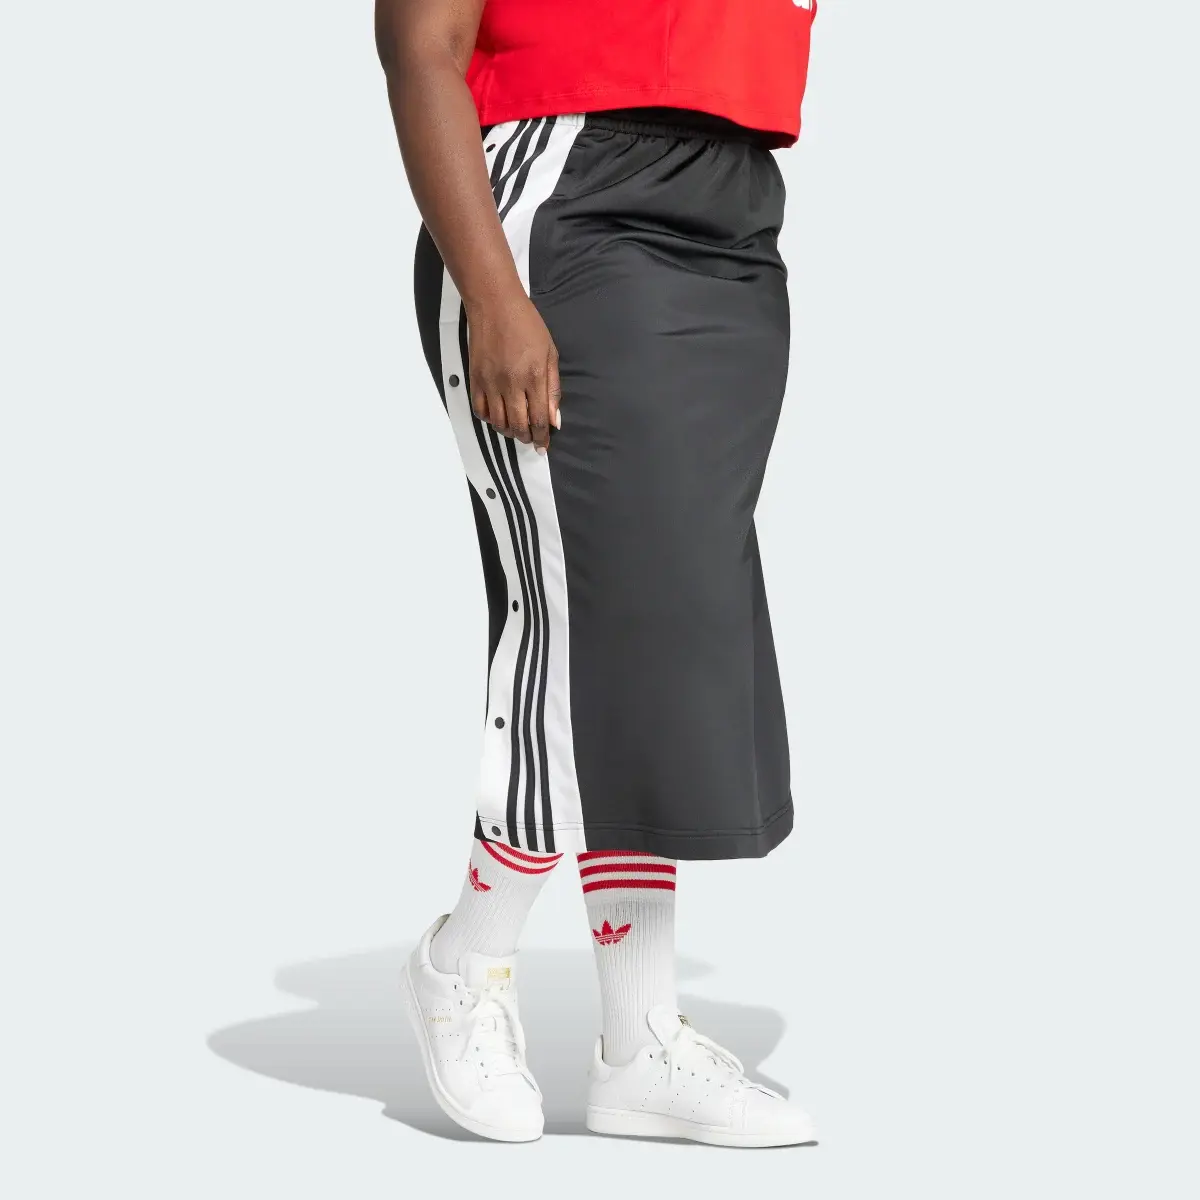 Adidas Adibreak Skirt (Plus Size). 2